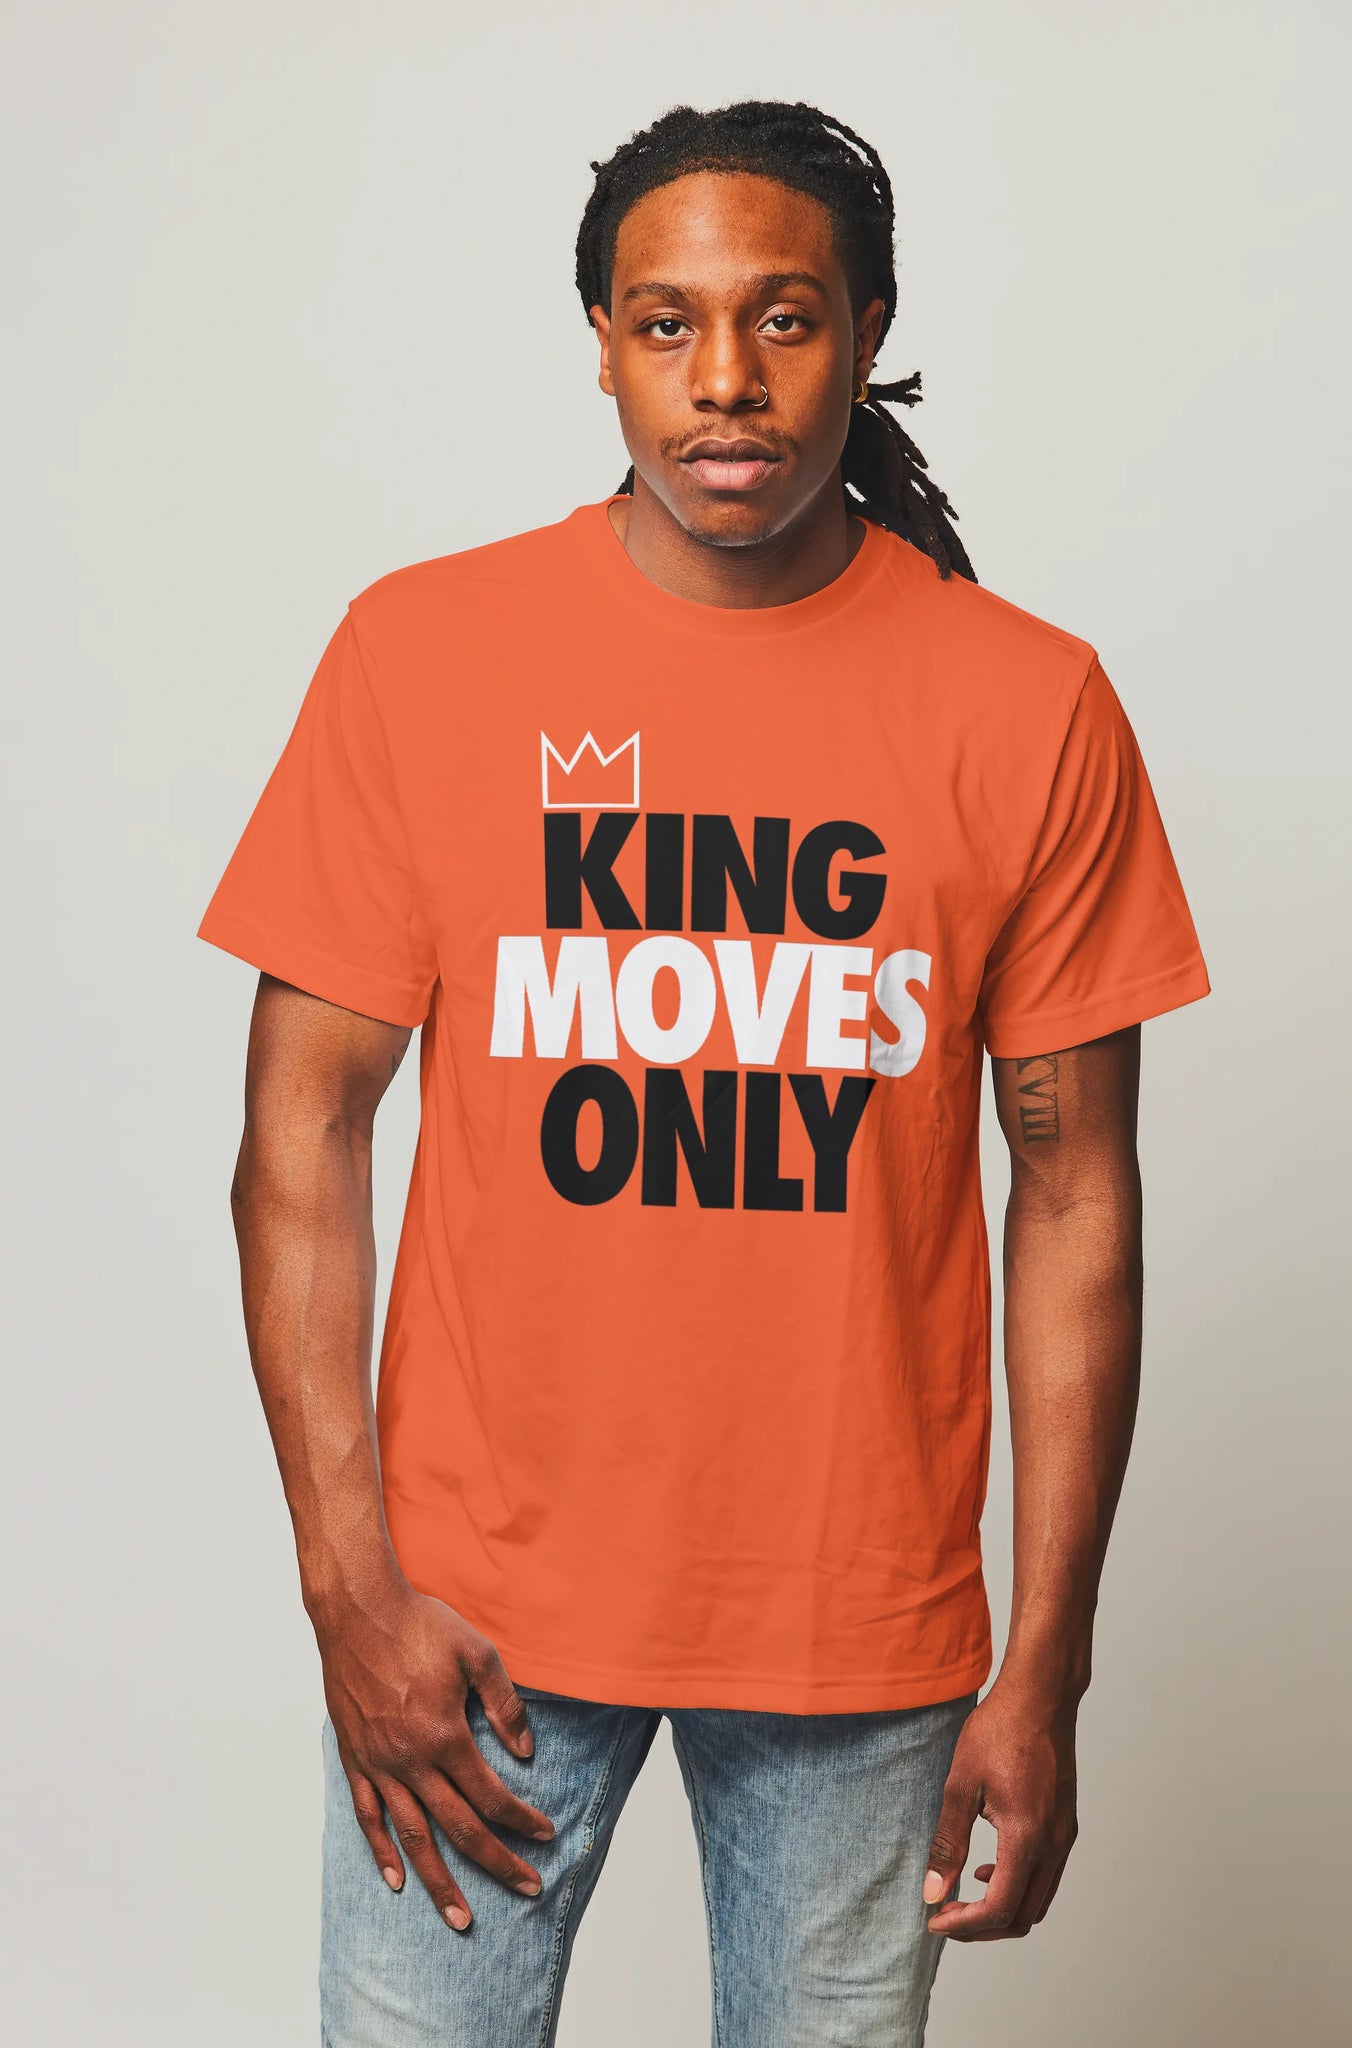 King Only" T-Shirt – Queen Sierra Shanelle